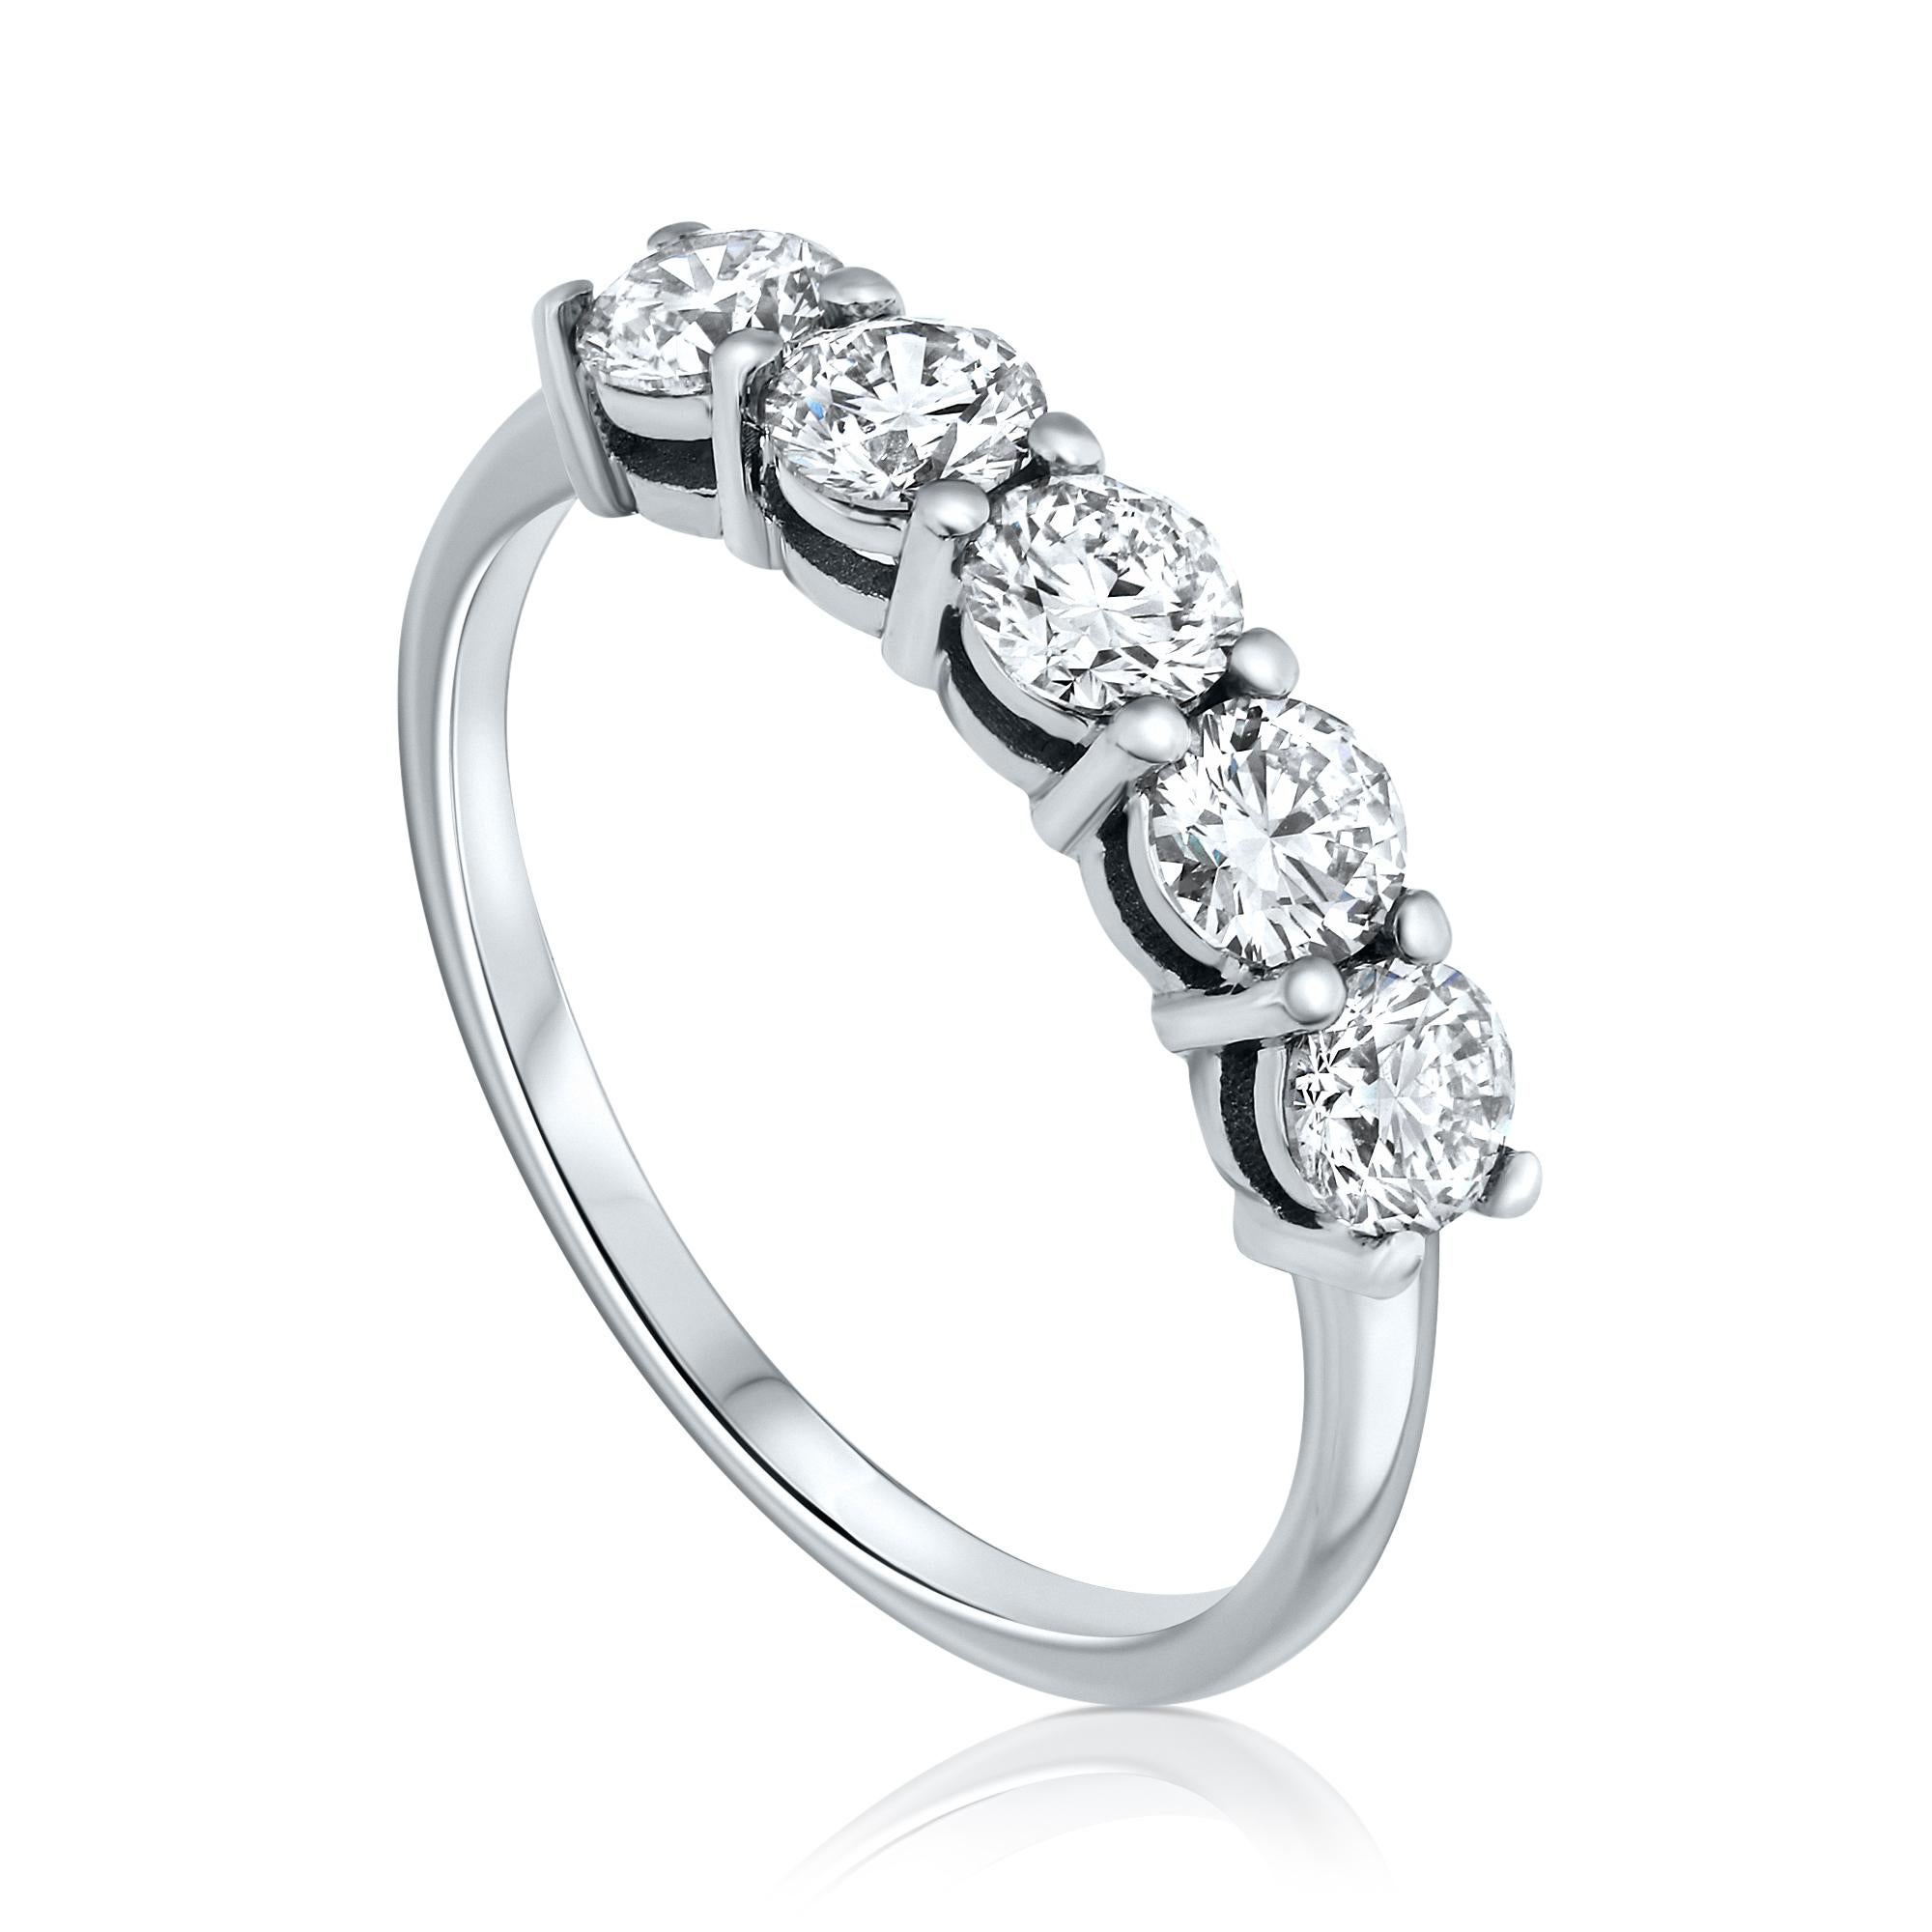 For Sale:  1.00 Carat 5 Stone Diamond Wedding Ring in 14k White Gold, Shlomit Rogel 6